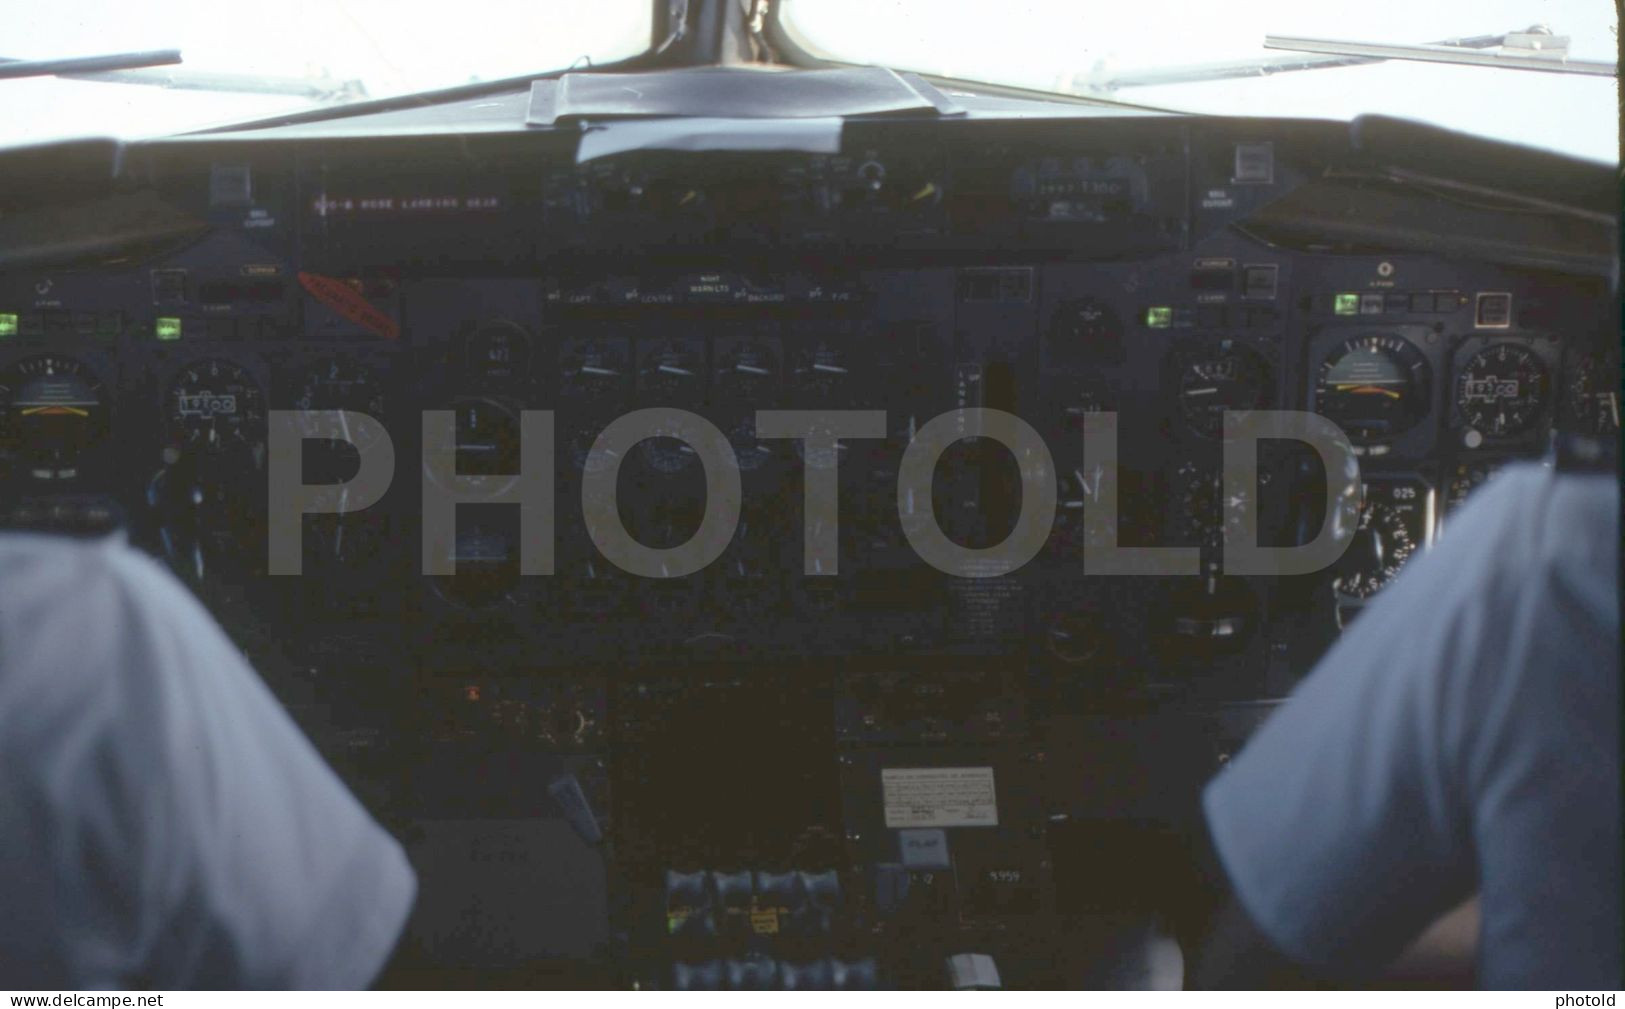 1977 COCKPIT PLANE AIRCRAFT AVION SAUDI ARABIA 35mm DIAPOSITIVE SLIDE NO PHOTO FOTO NB2663 - Diapositives